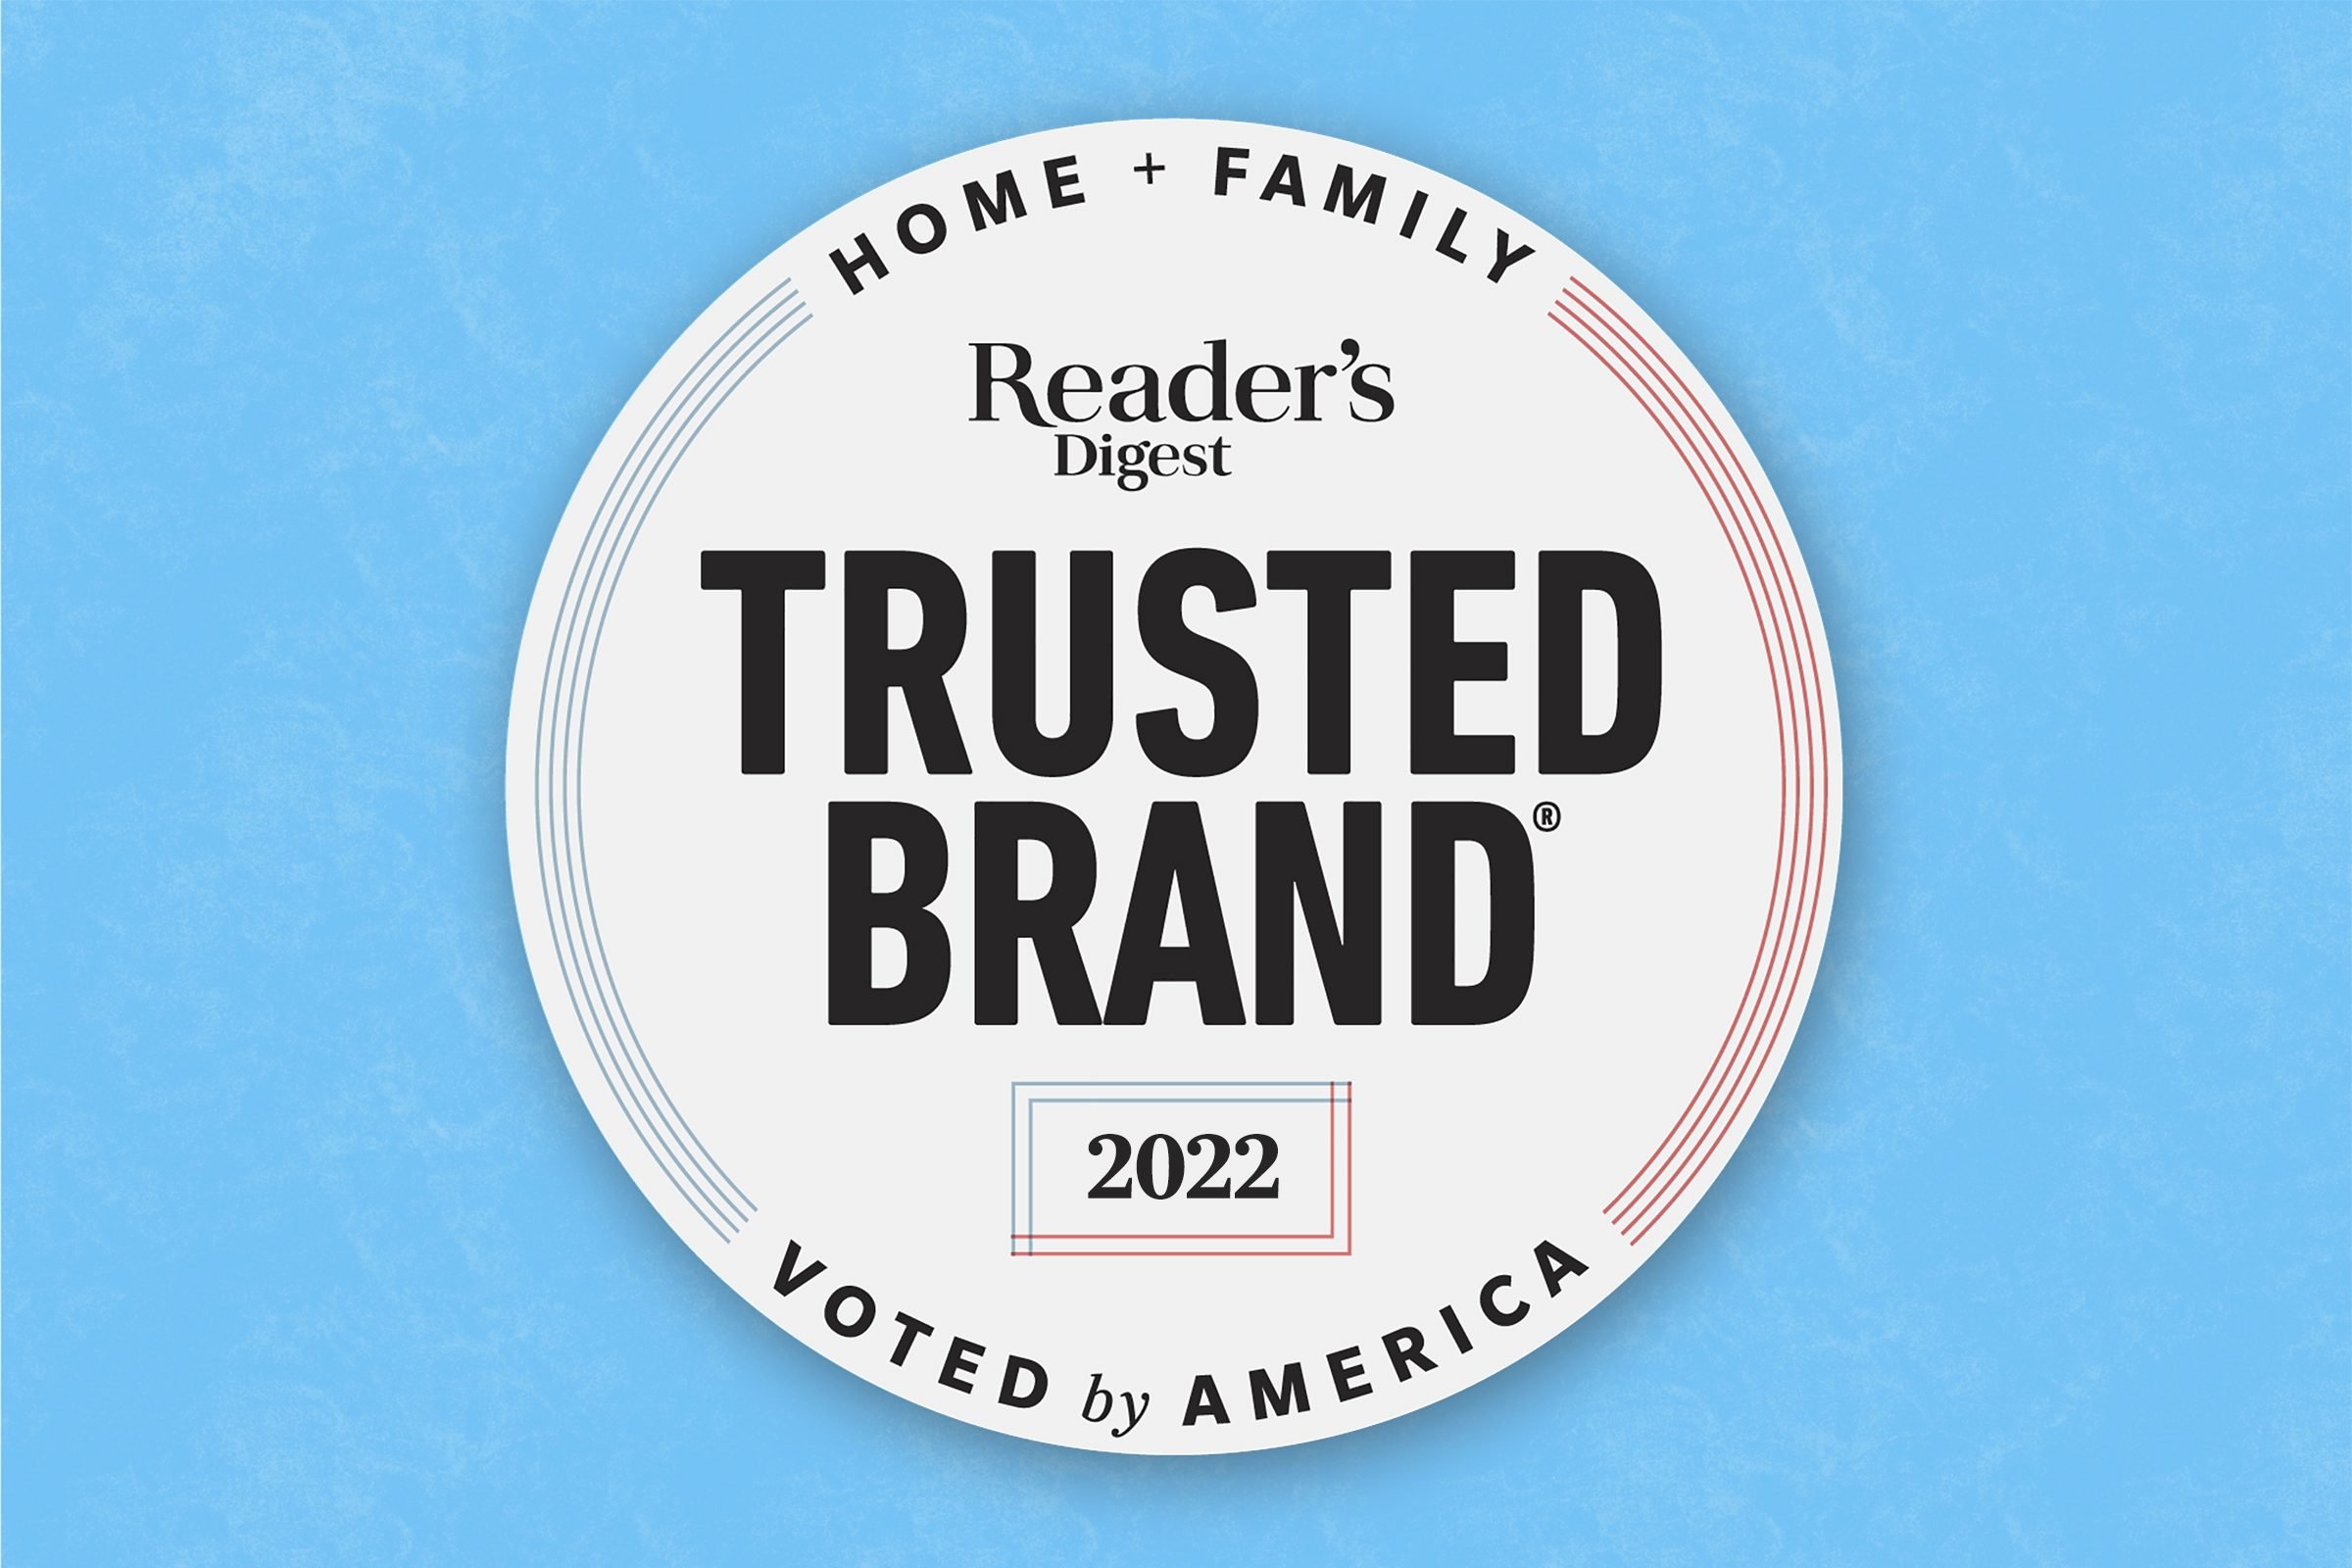 Home - Family Brand